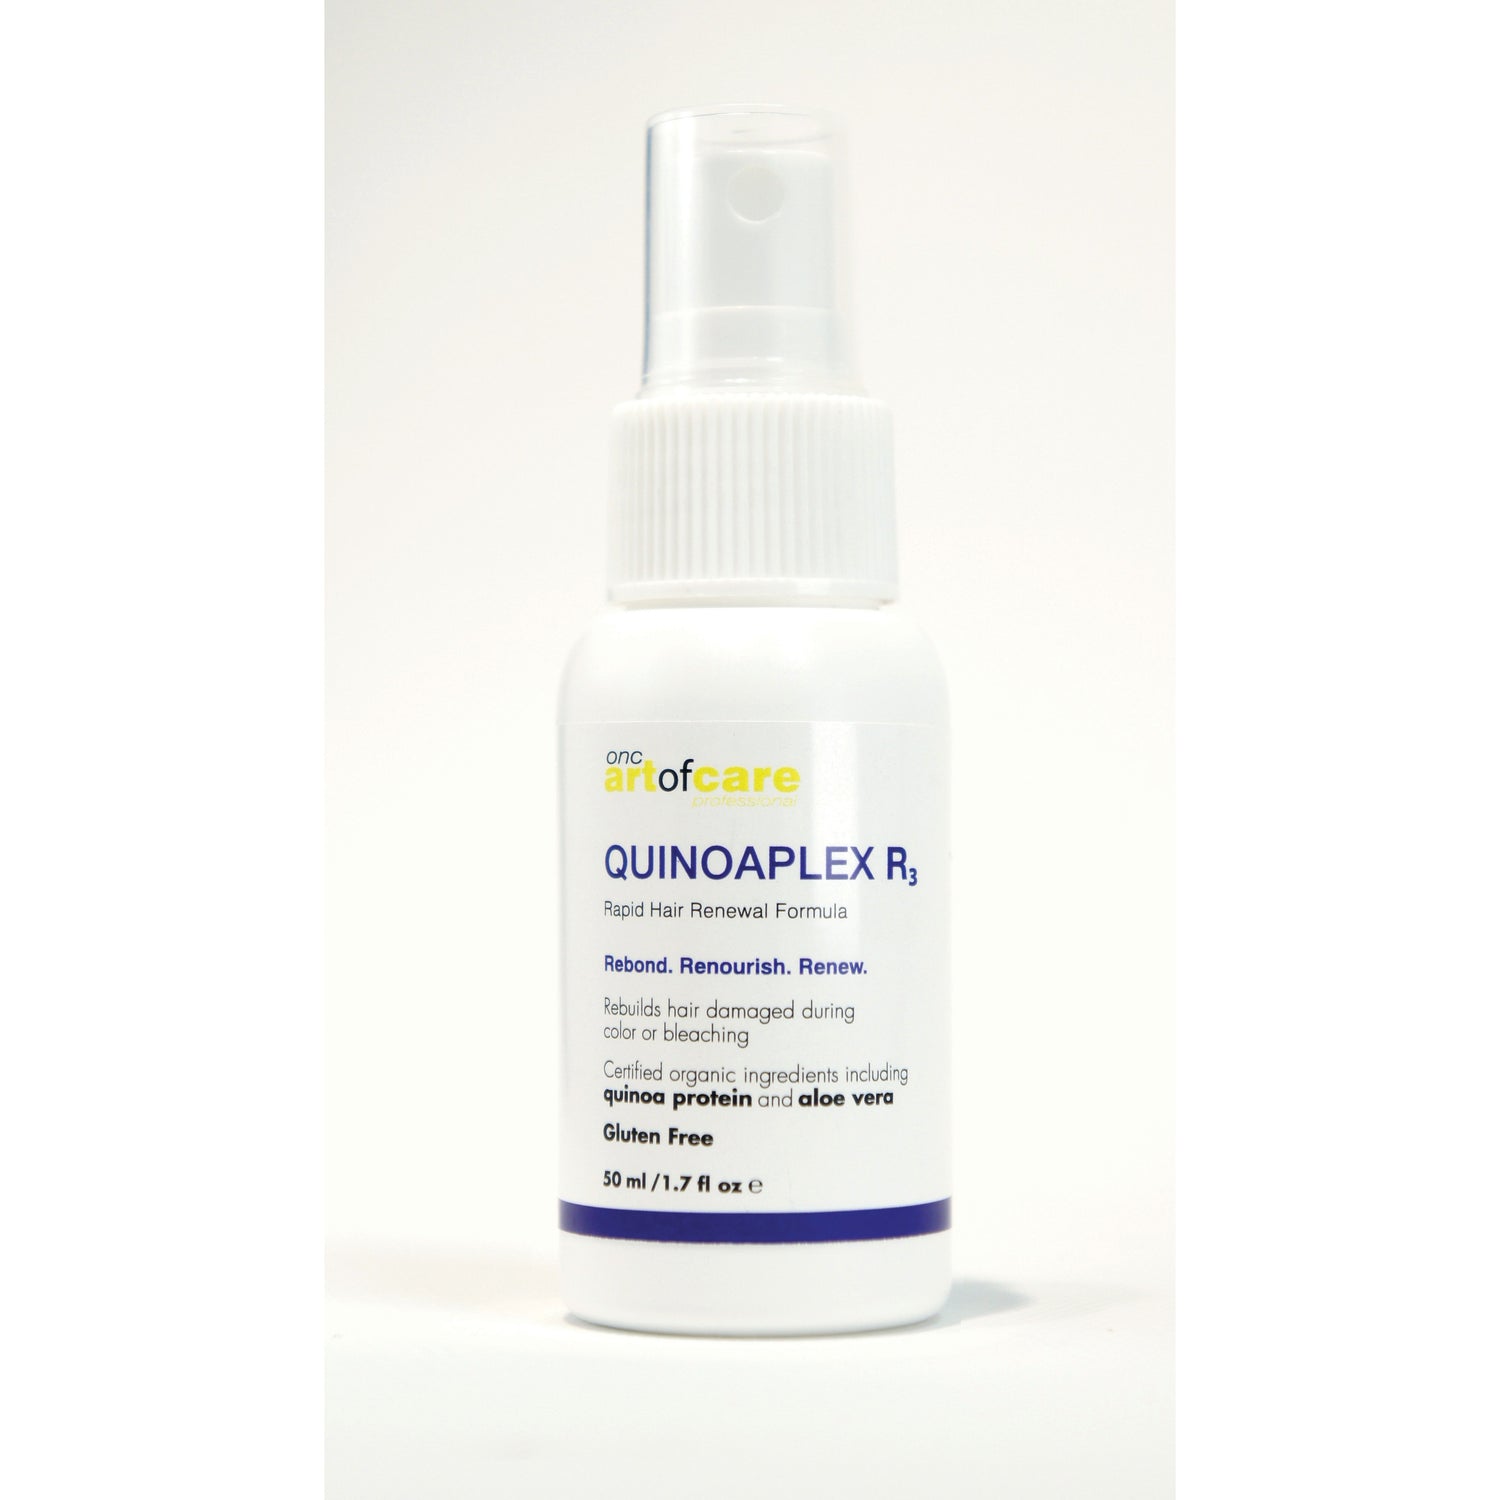 QUINOAPLEX R3 Rapid Hair Renewal Formula 50 mL / 1.7 fl. oz. bottle